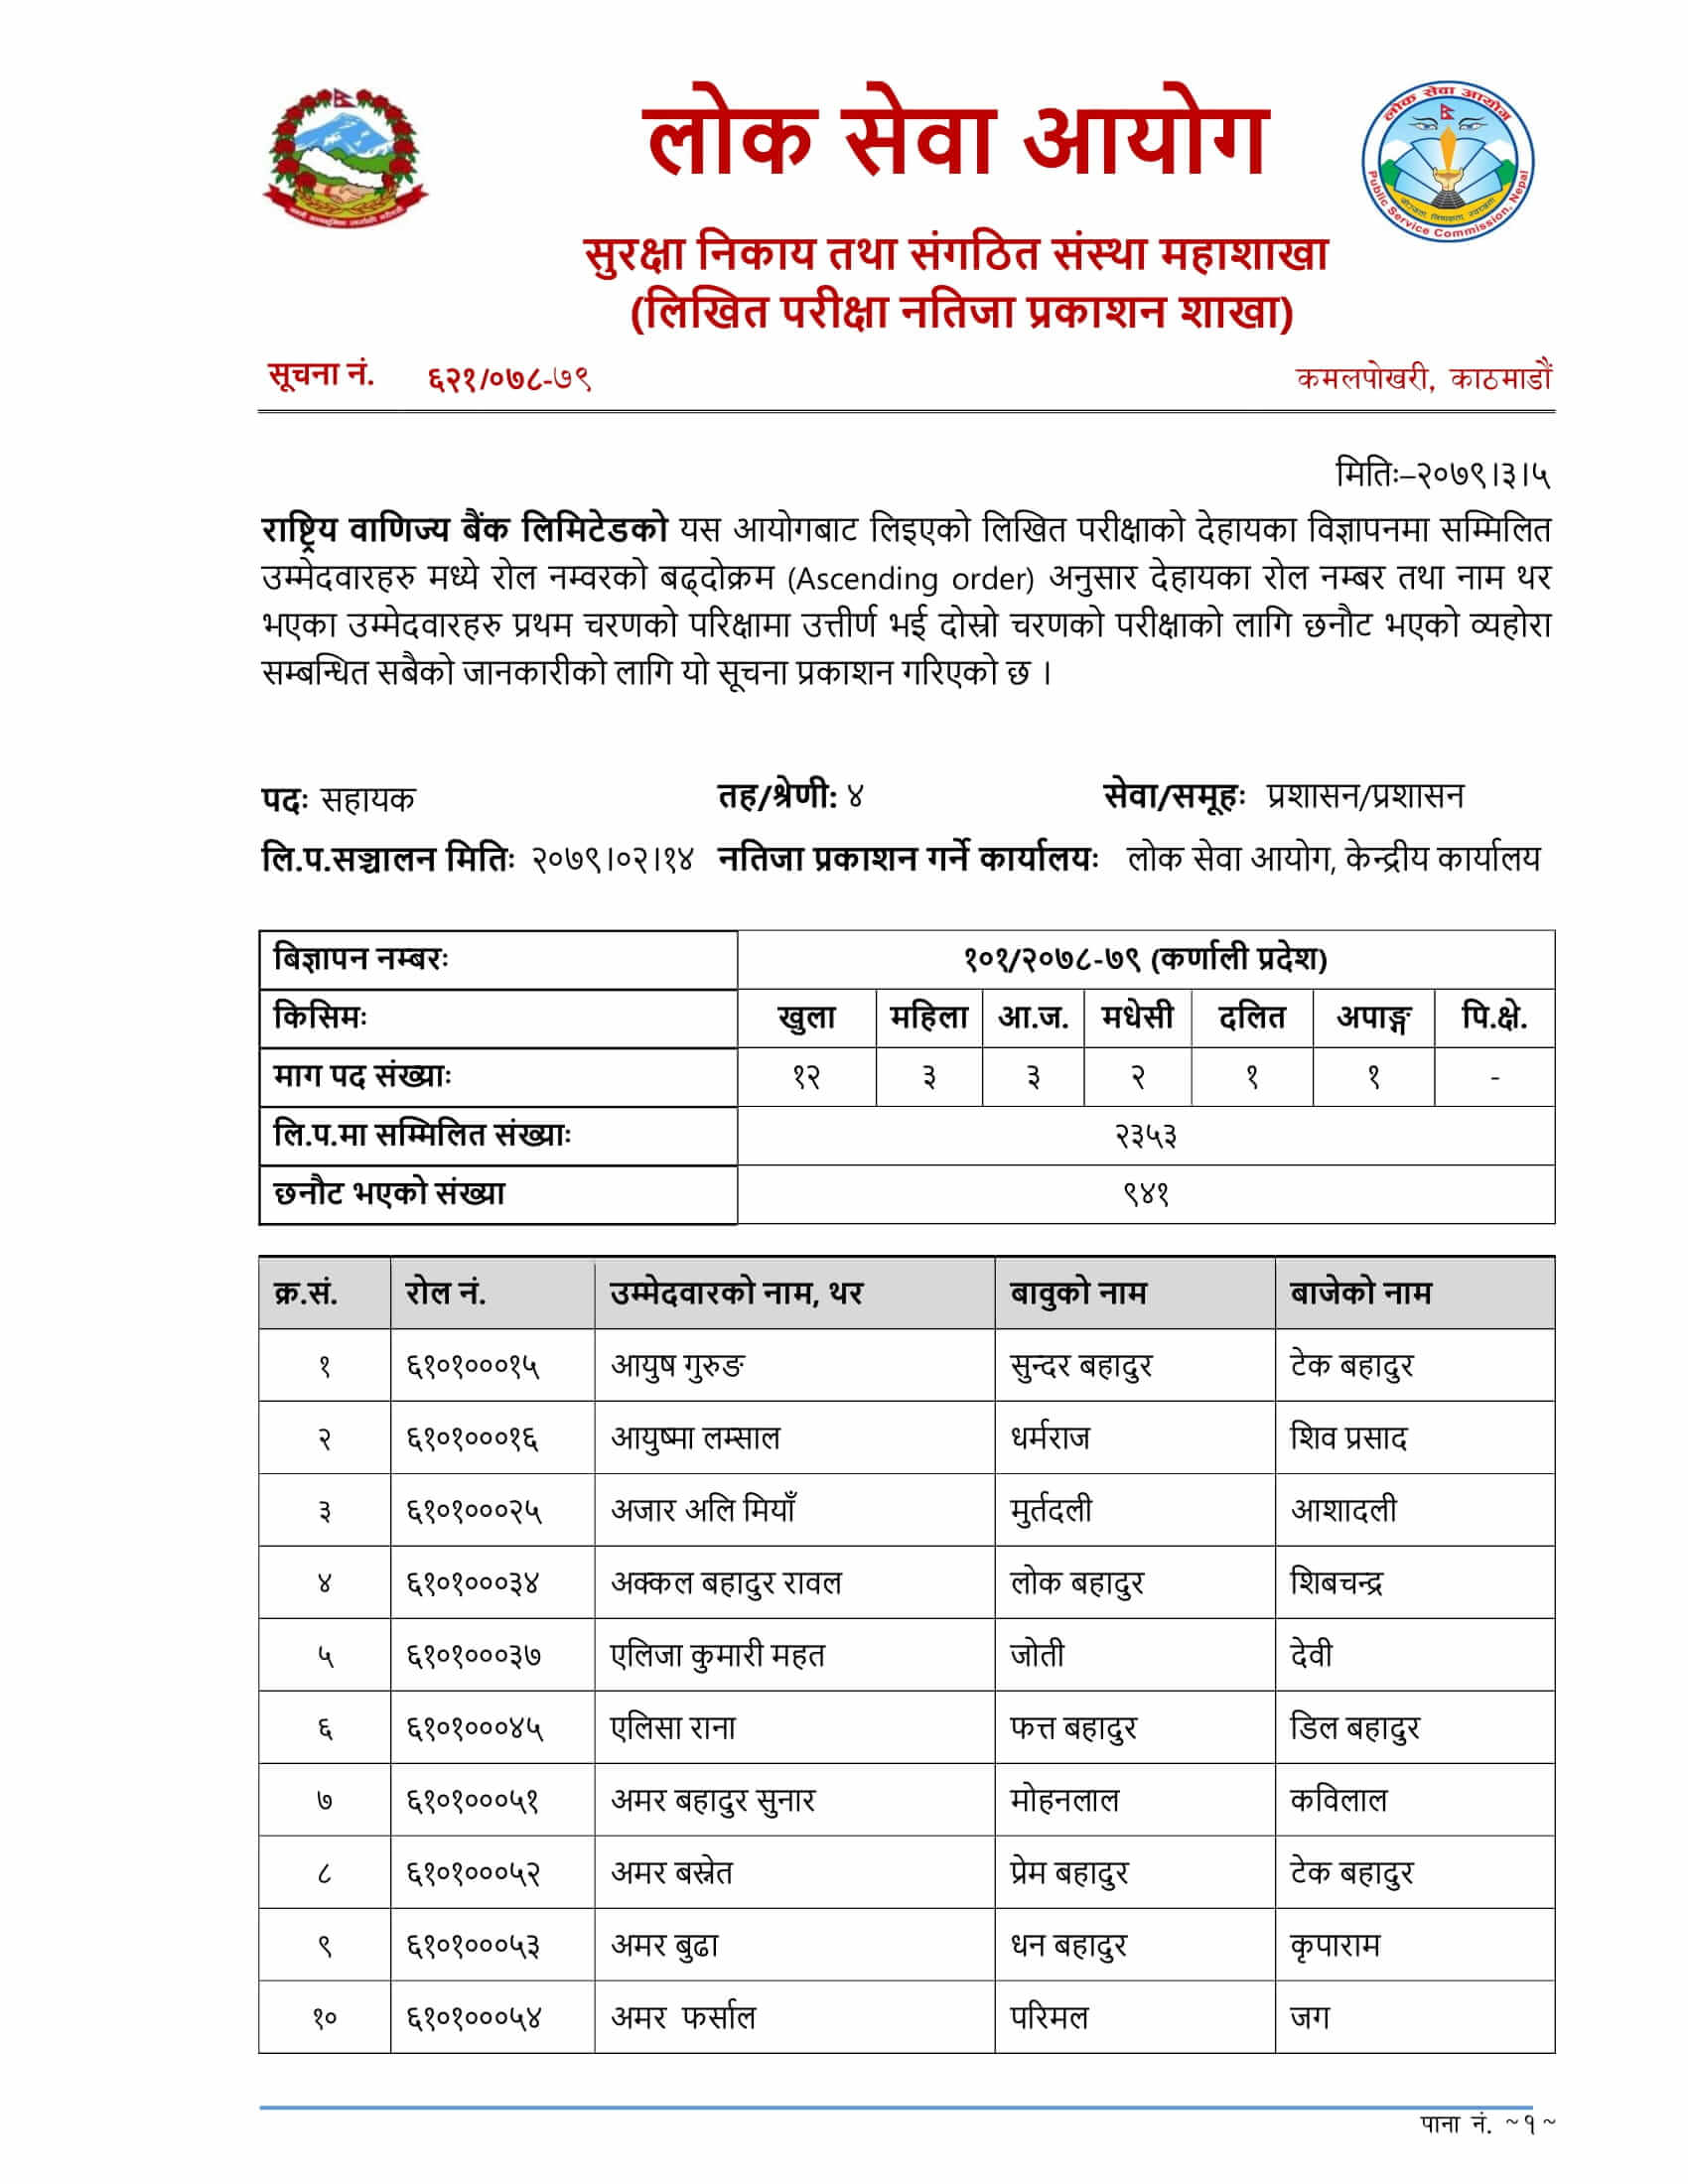 RBB Karnali Pradesh Written Exam Result of 4th Level Assistant